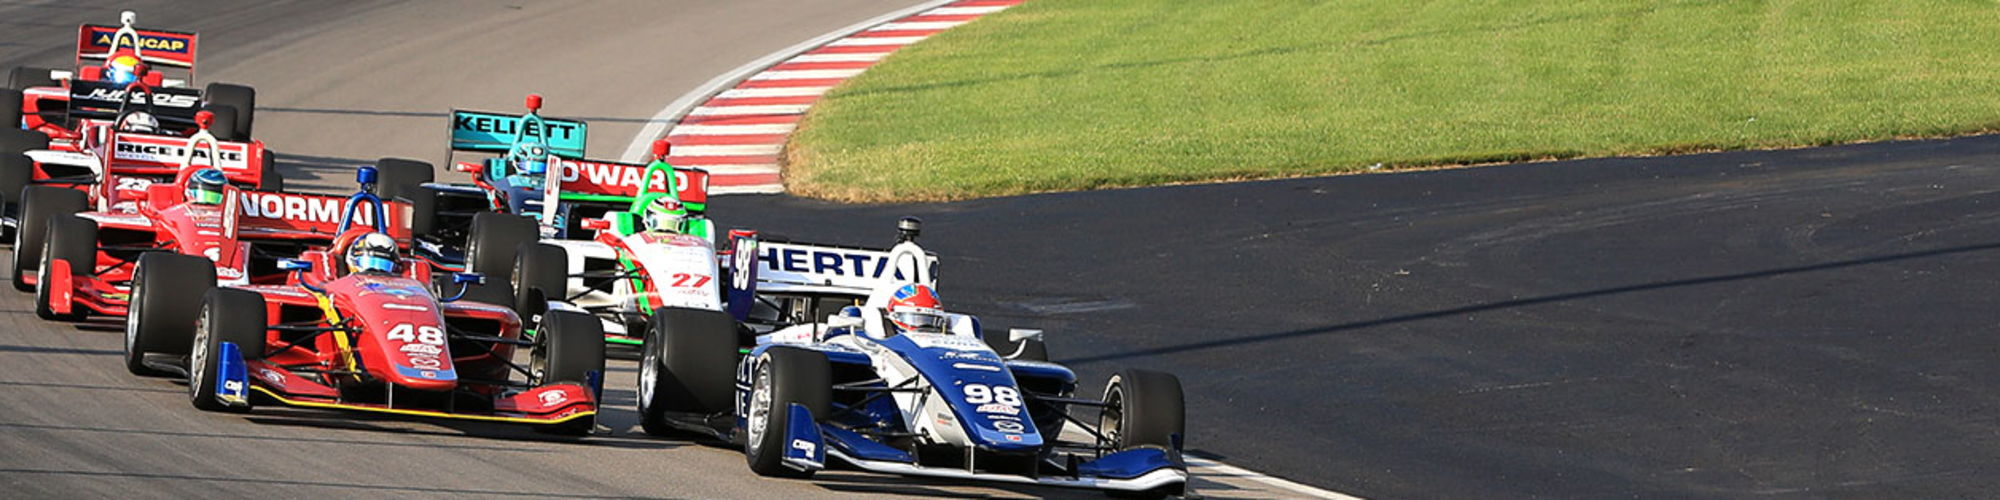 Gateway Motorsports Park cover image